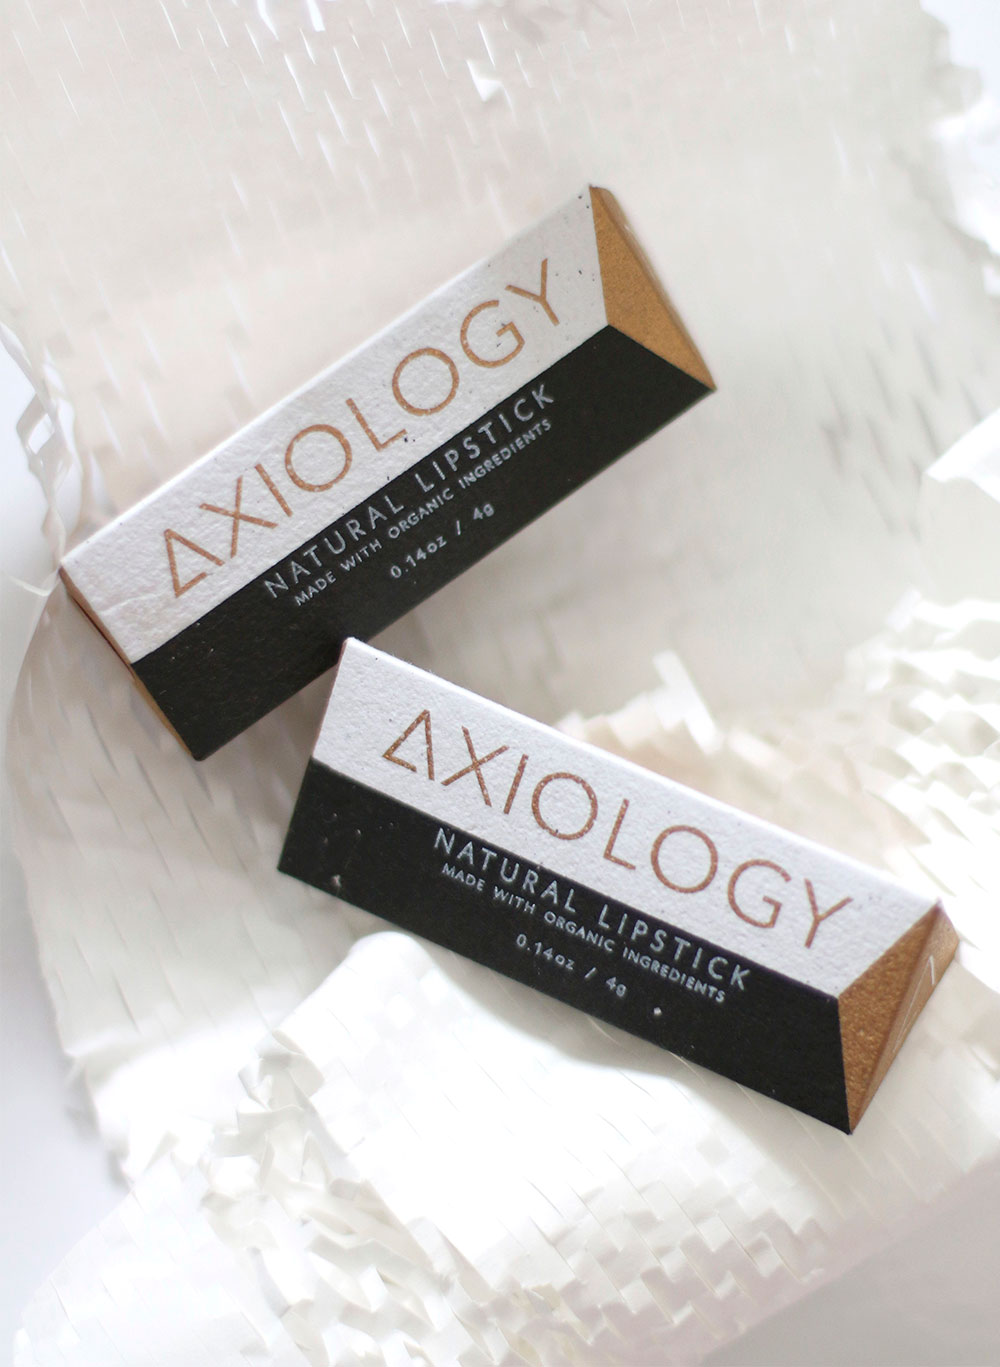 axiology natural lipstick boxes